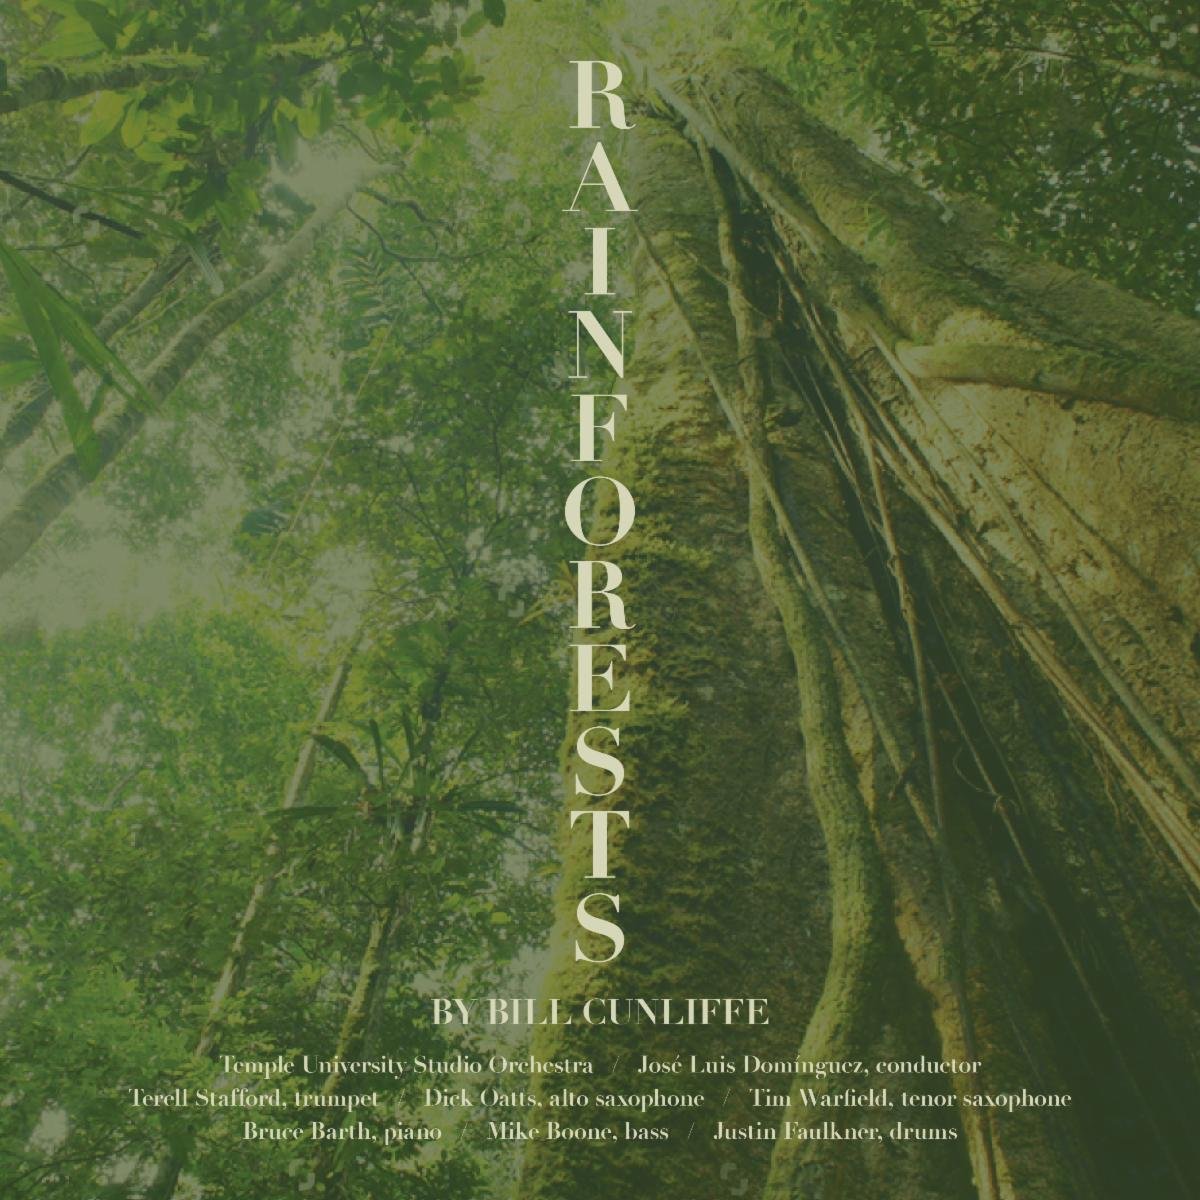 Rainforests 